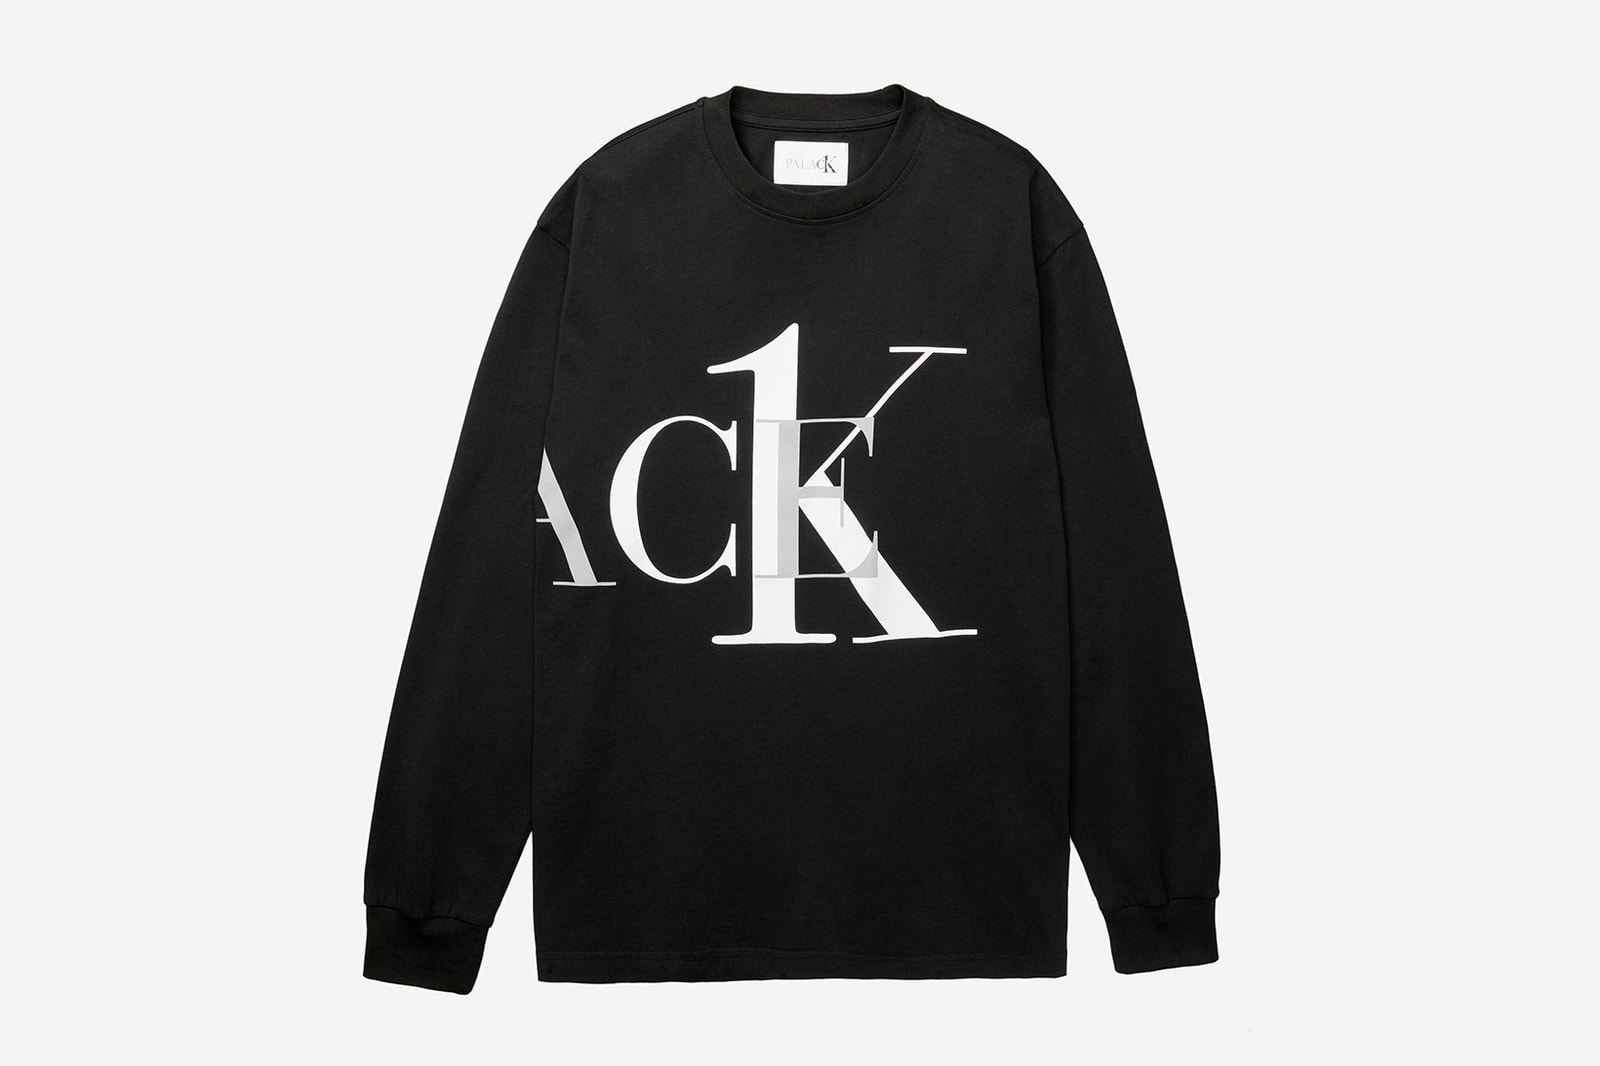 Calvin Klein CK1 PALACE Collaboration Official Images Lookbook Calvans Denim Underwear Release Info